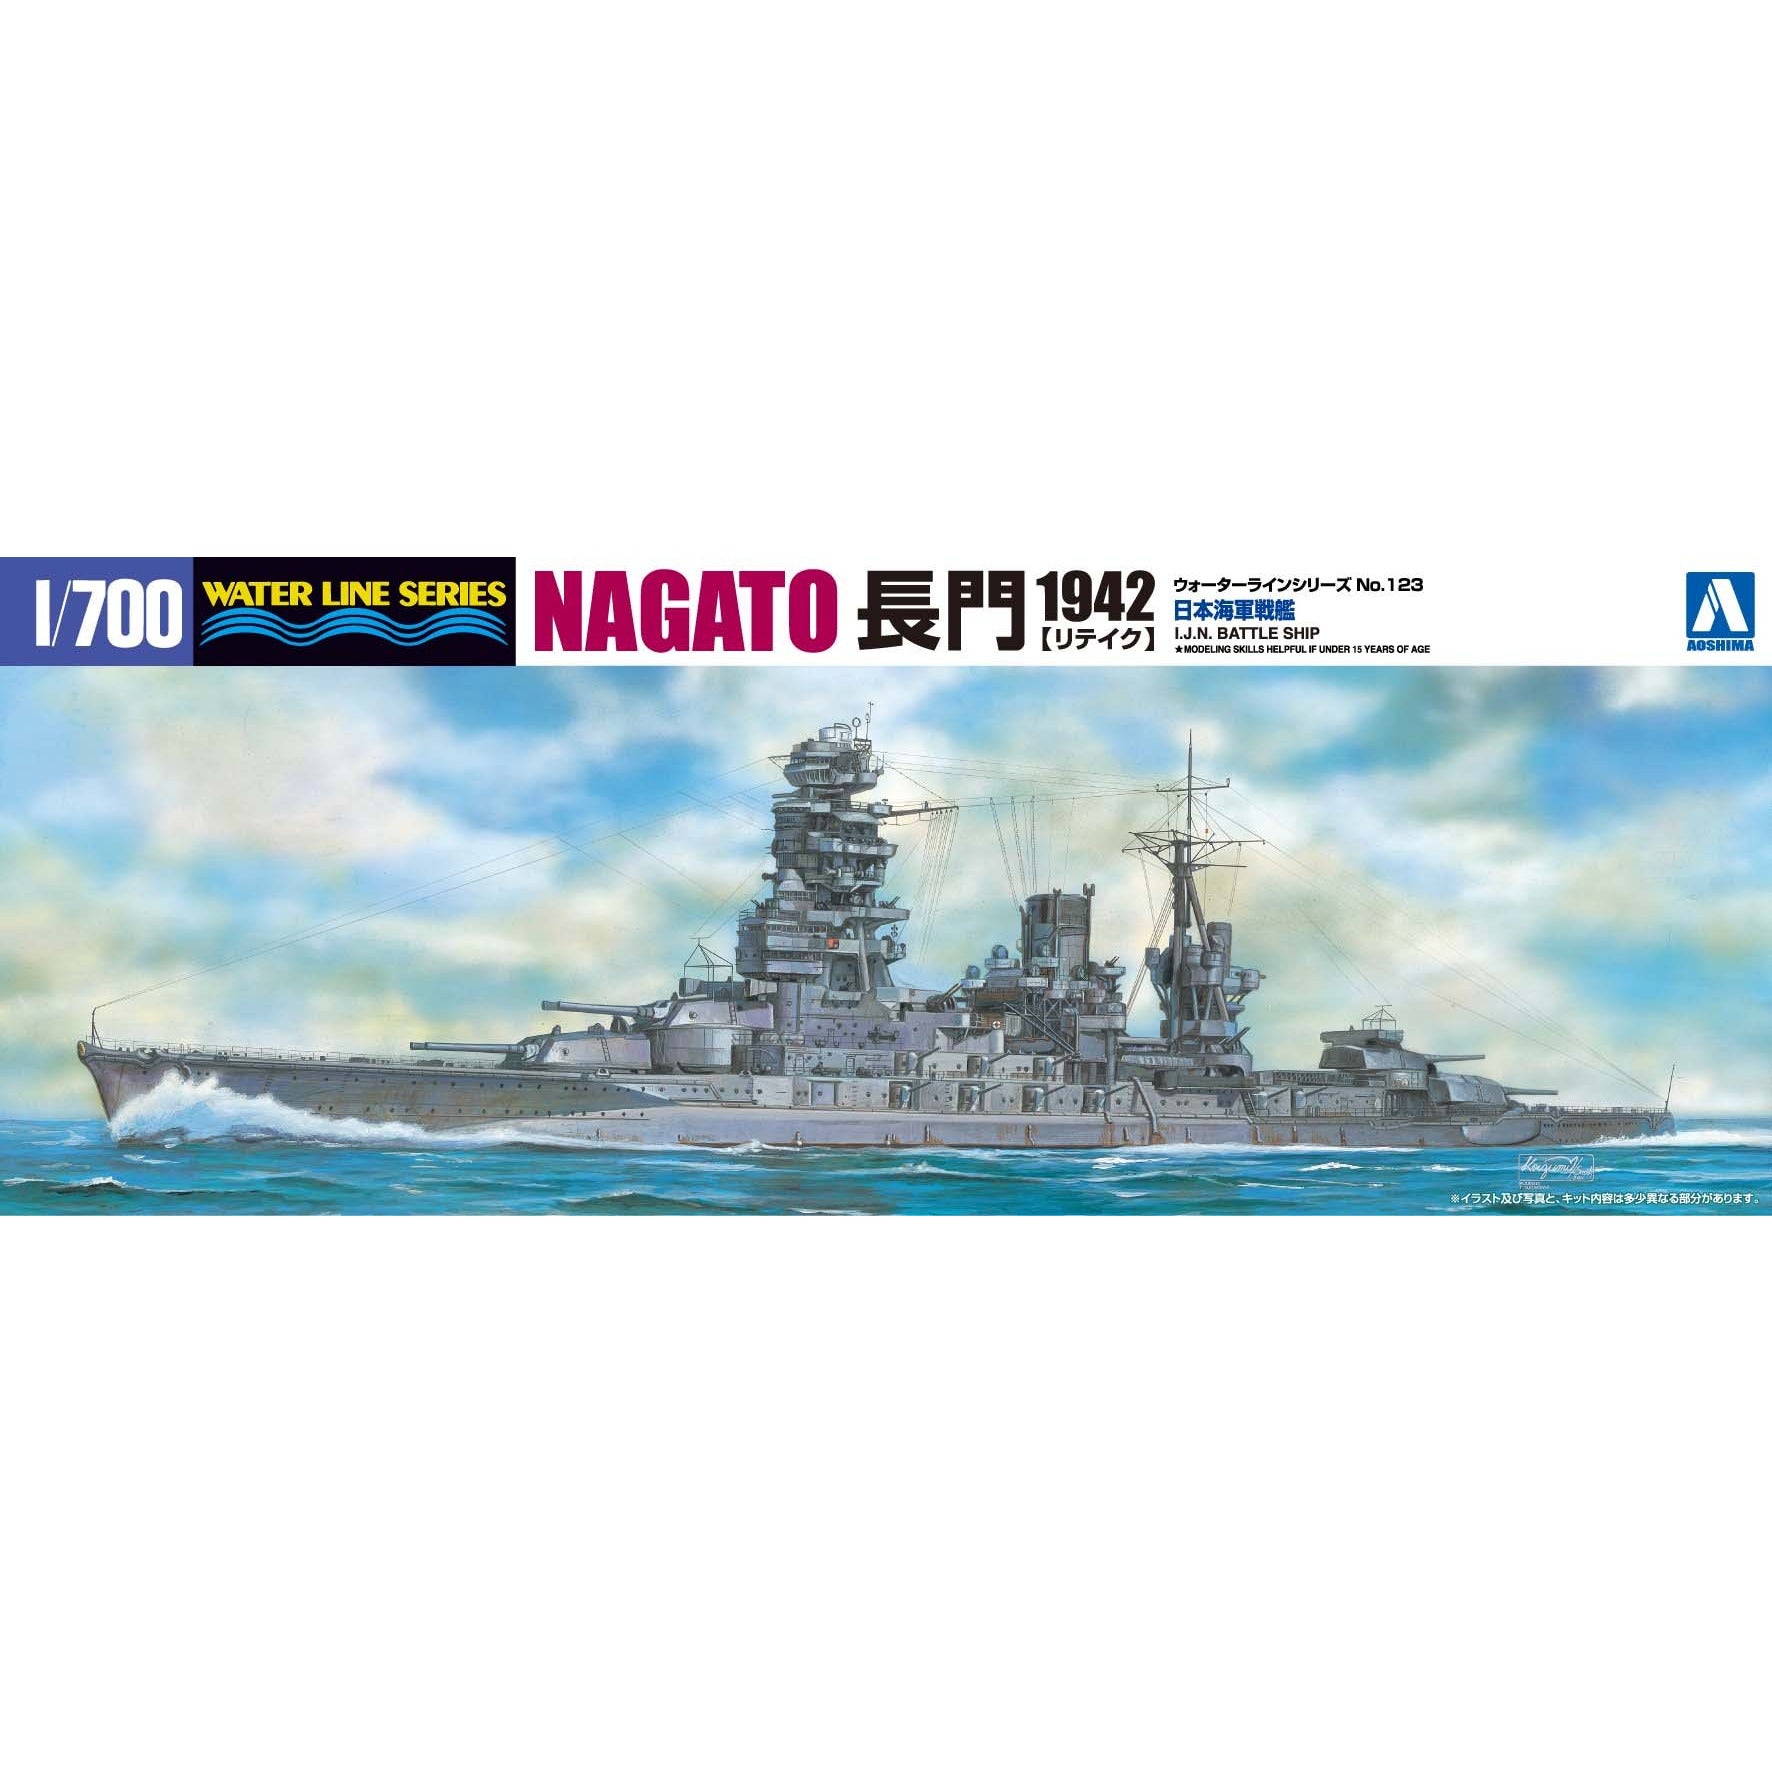 Nagato Japanese Battleship 1/700 Model Ship Kit #123 Waterline Series #045107 by Aoshima